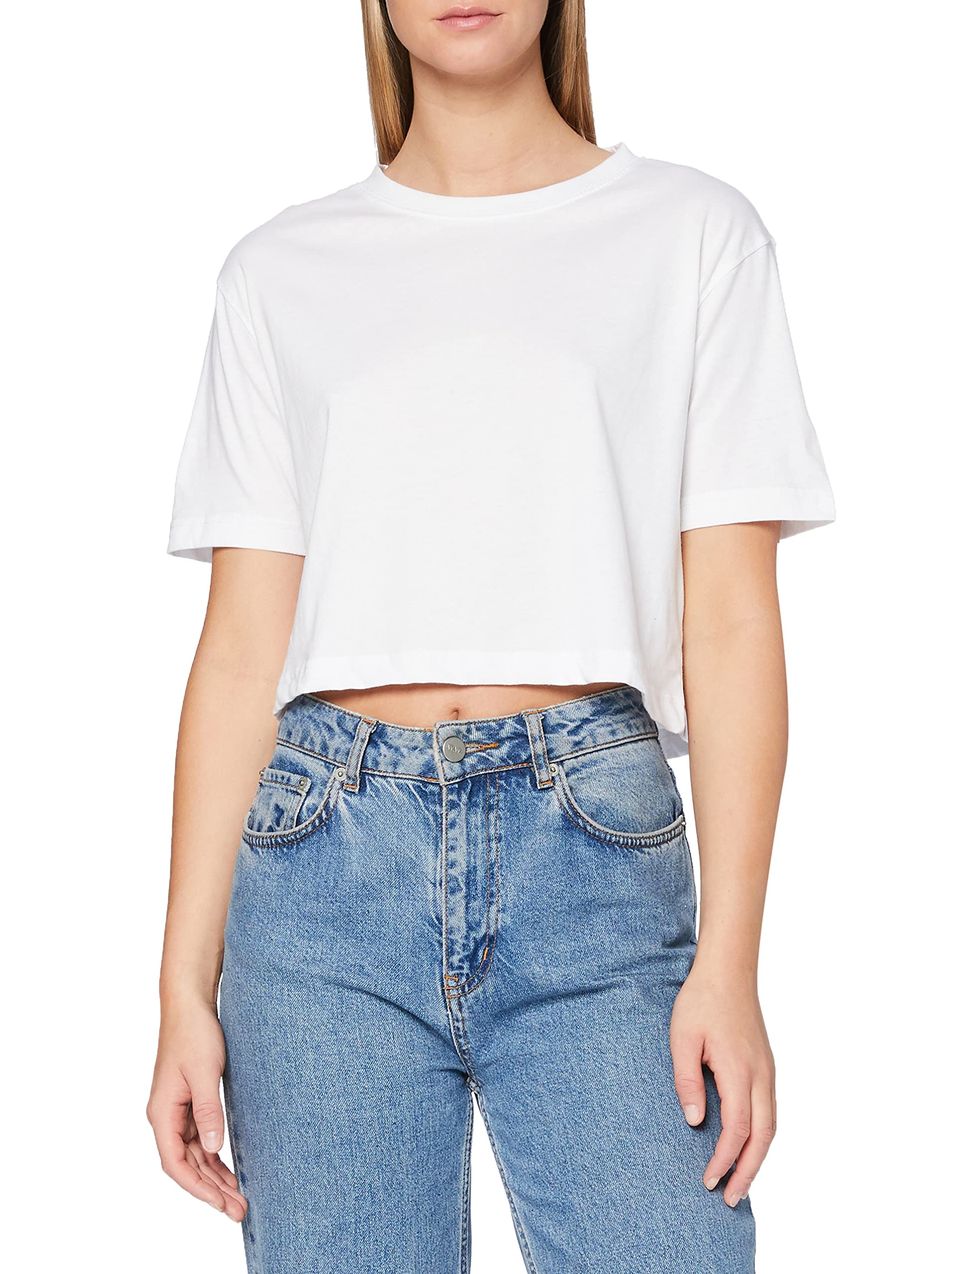 Urban Classics The Oversize Women's T-Shirt Short Sleeve White M